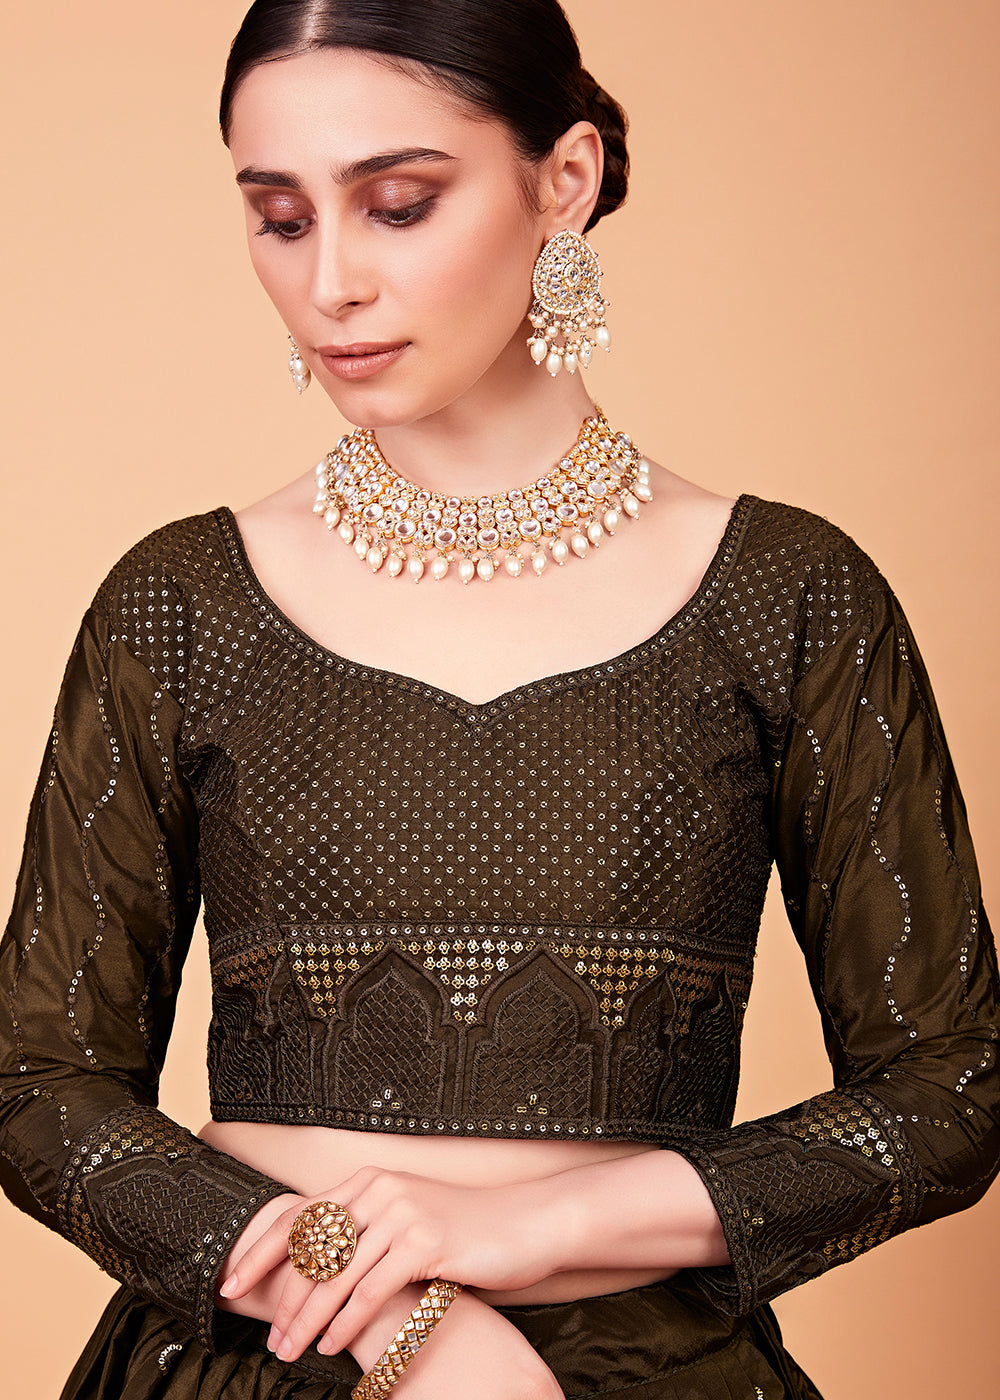 Buy Now Stunning Green Multi Thread & Sequins Mehndi Wear Lehenga Choli Online in USA, UK, Canada & Worldwide at Empress Clothing. 